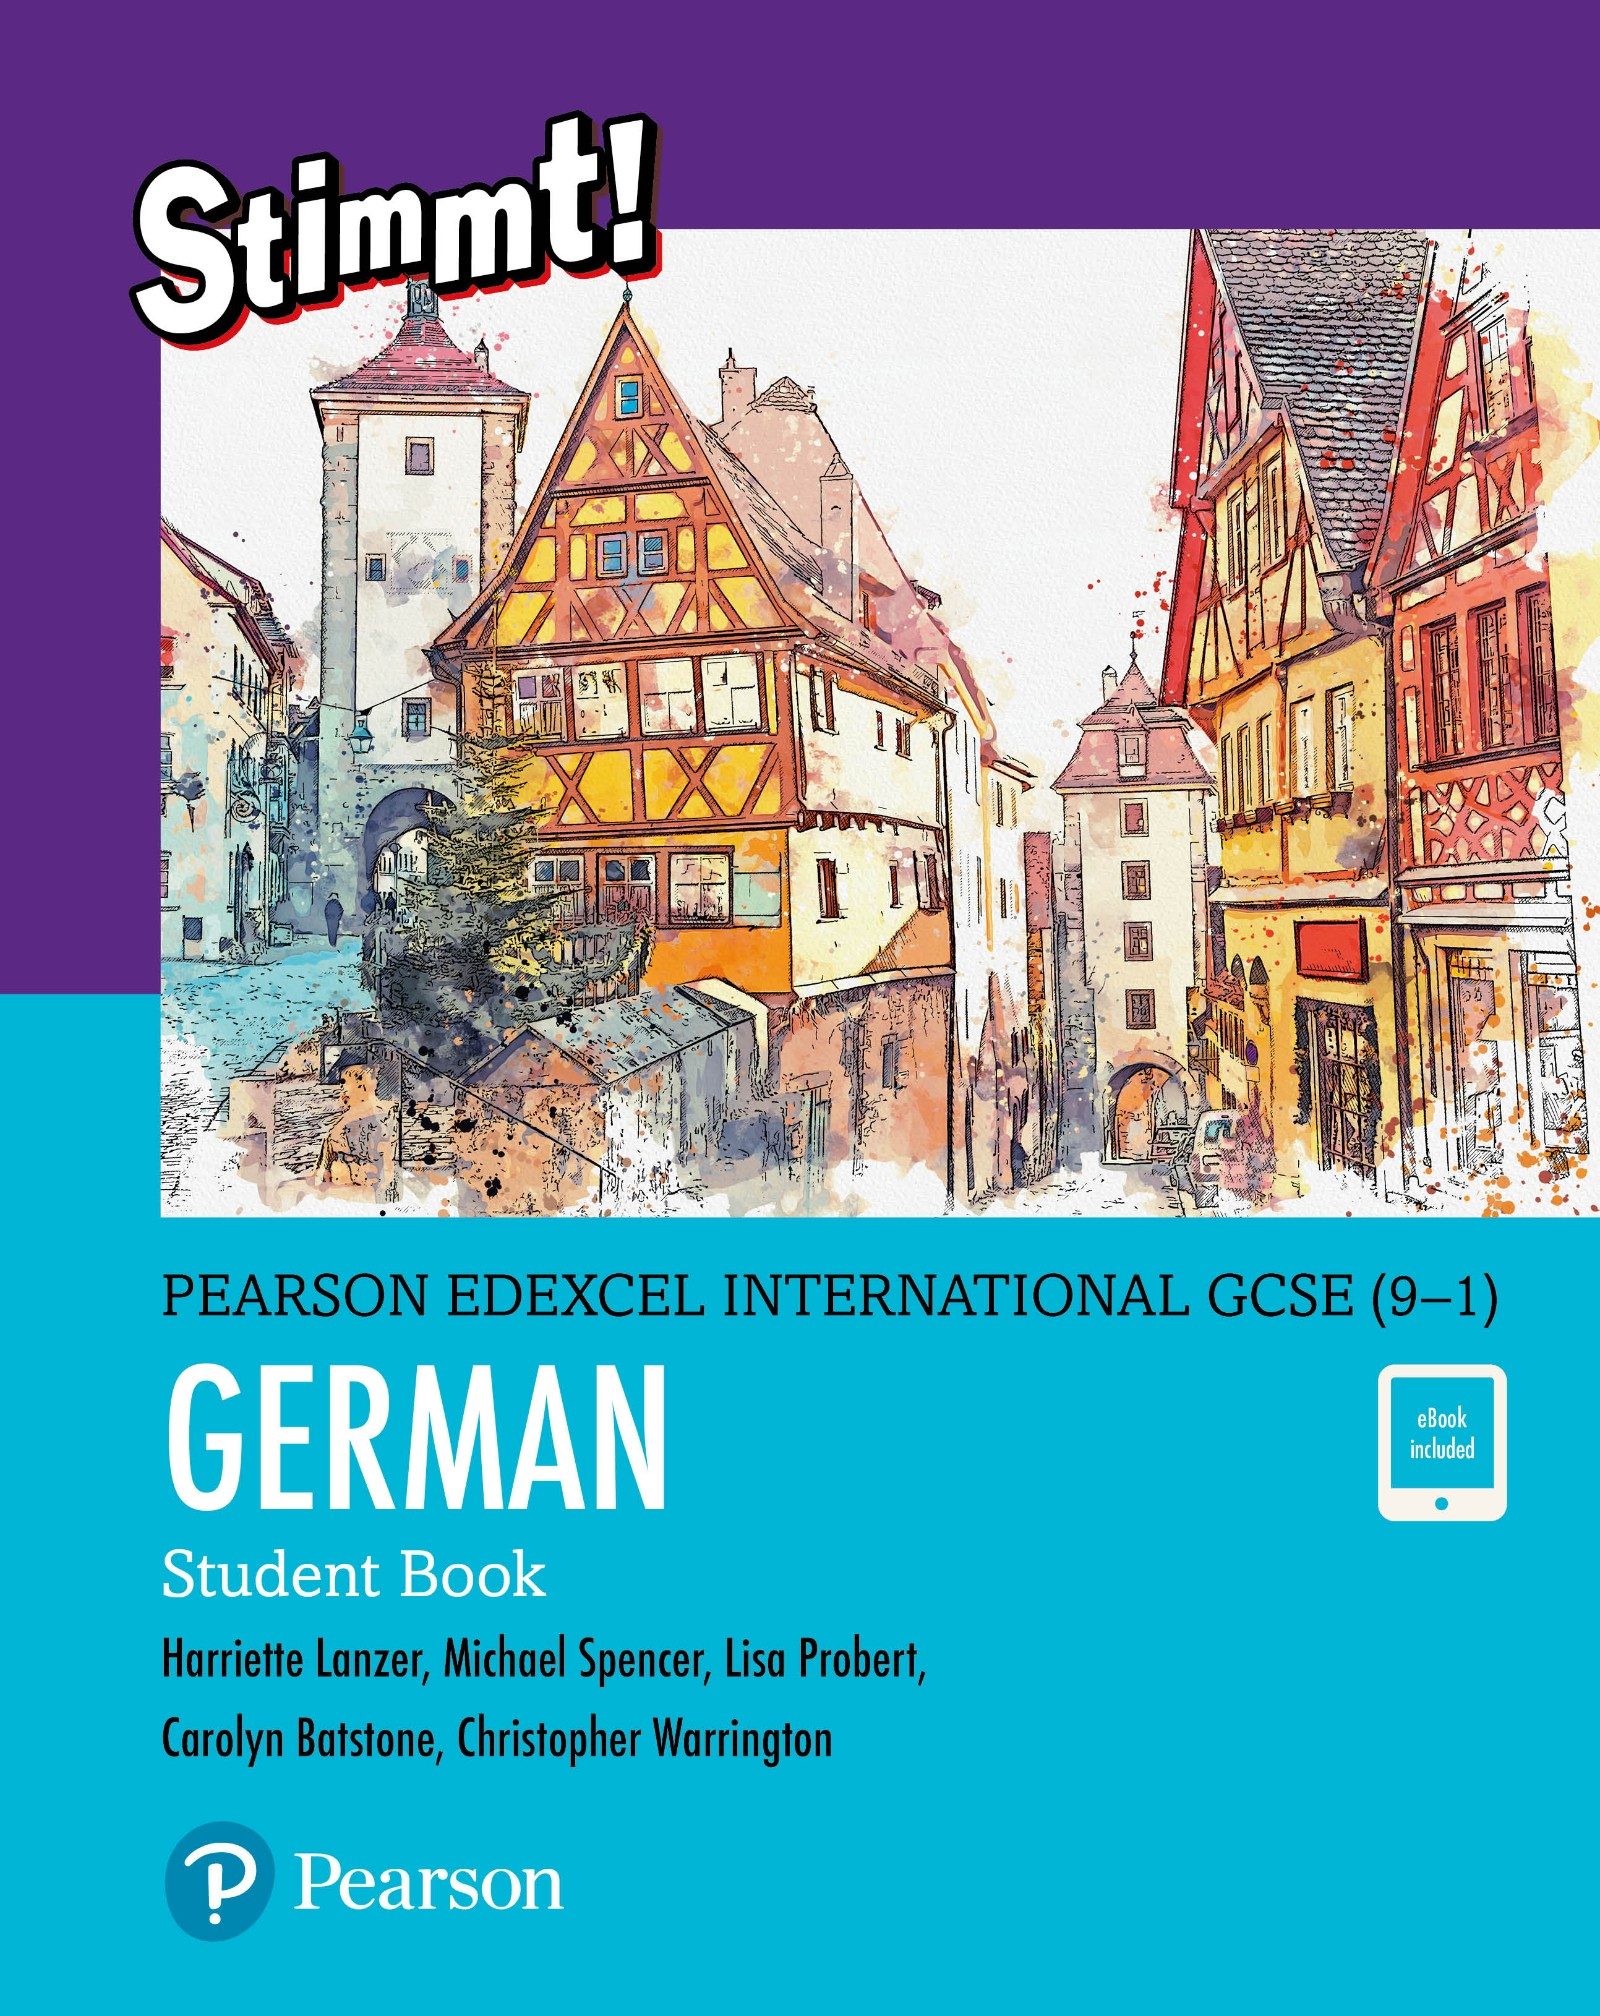 International GCSE Stimmt German book